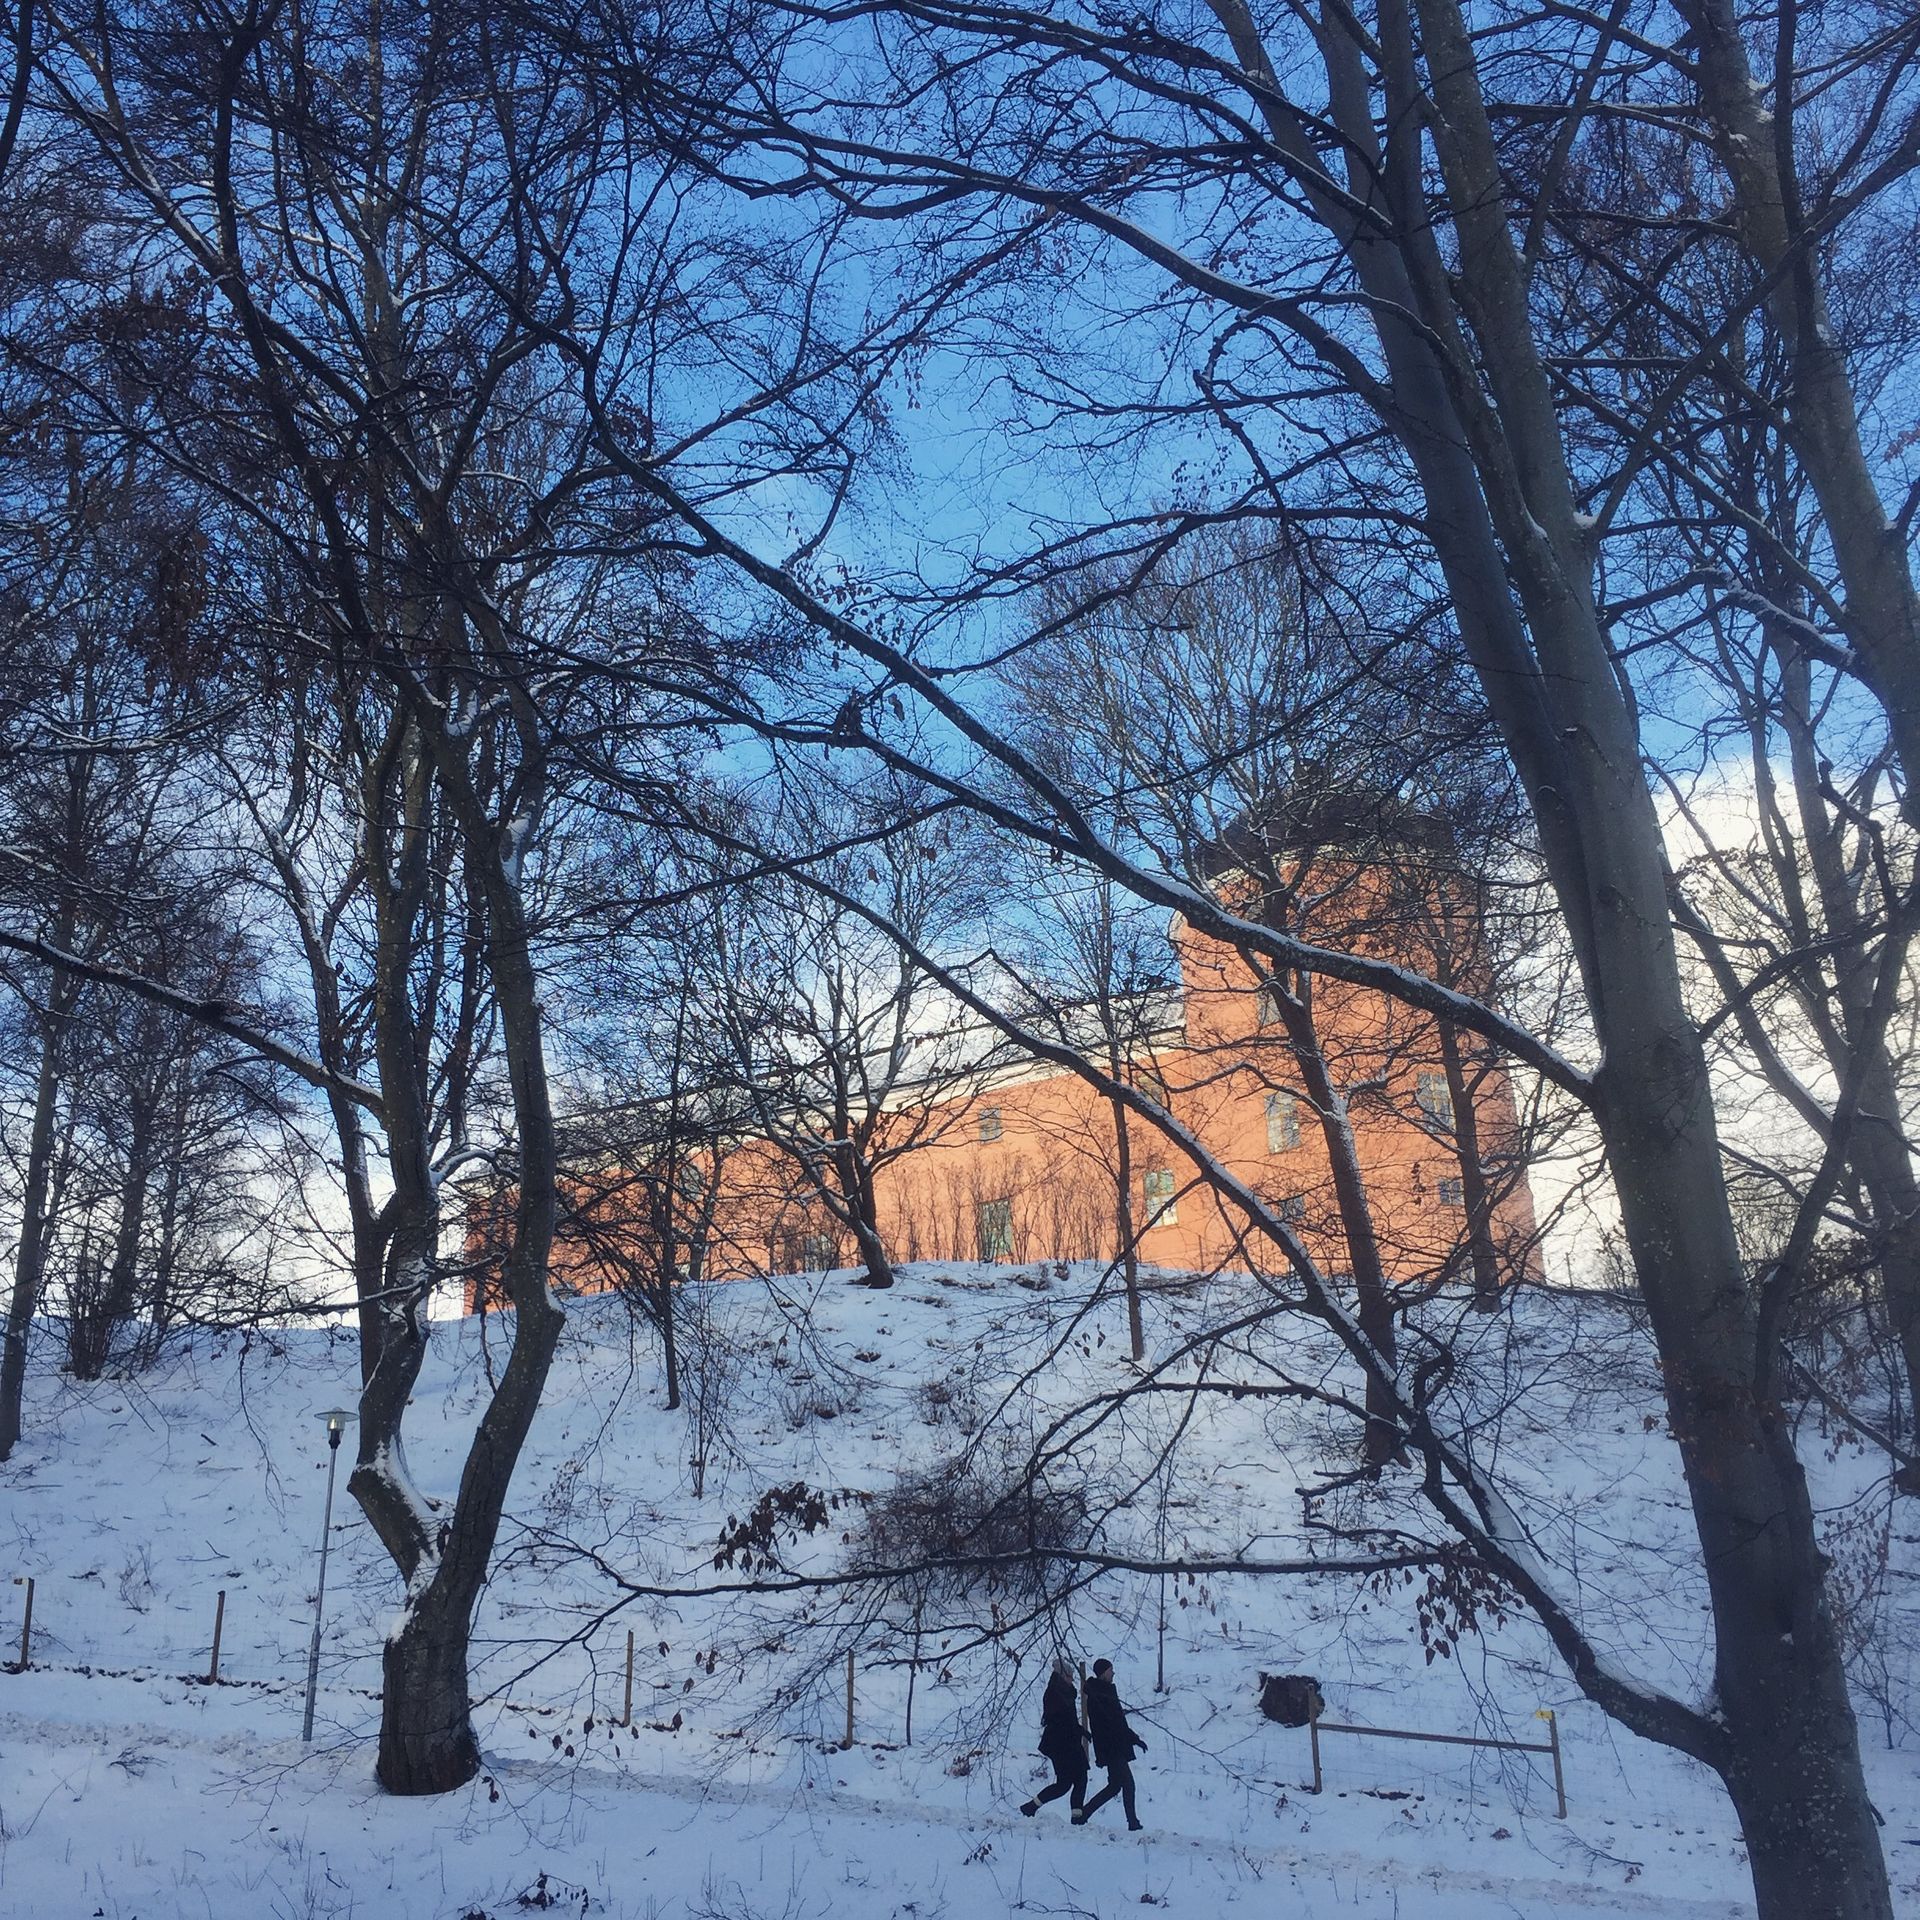 Uppsala Castle in the snow